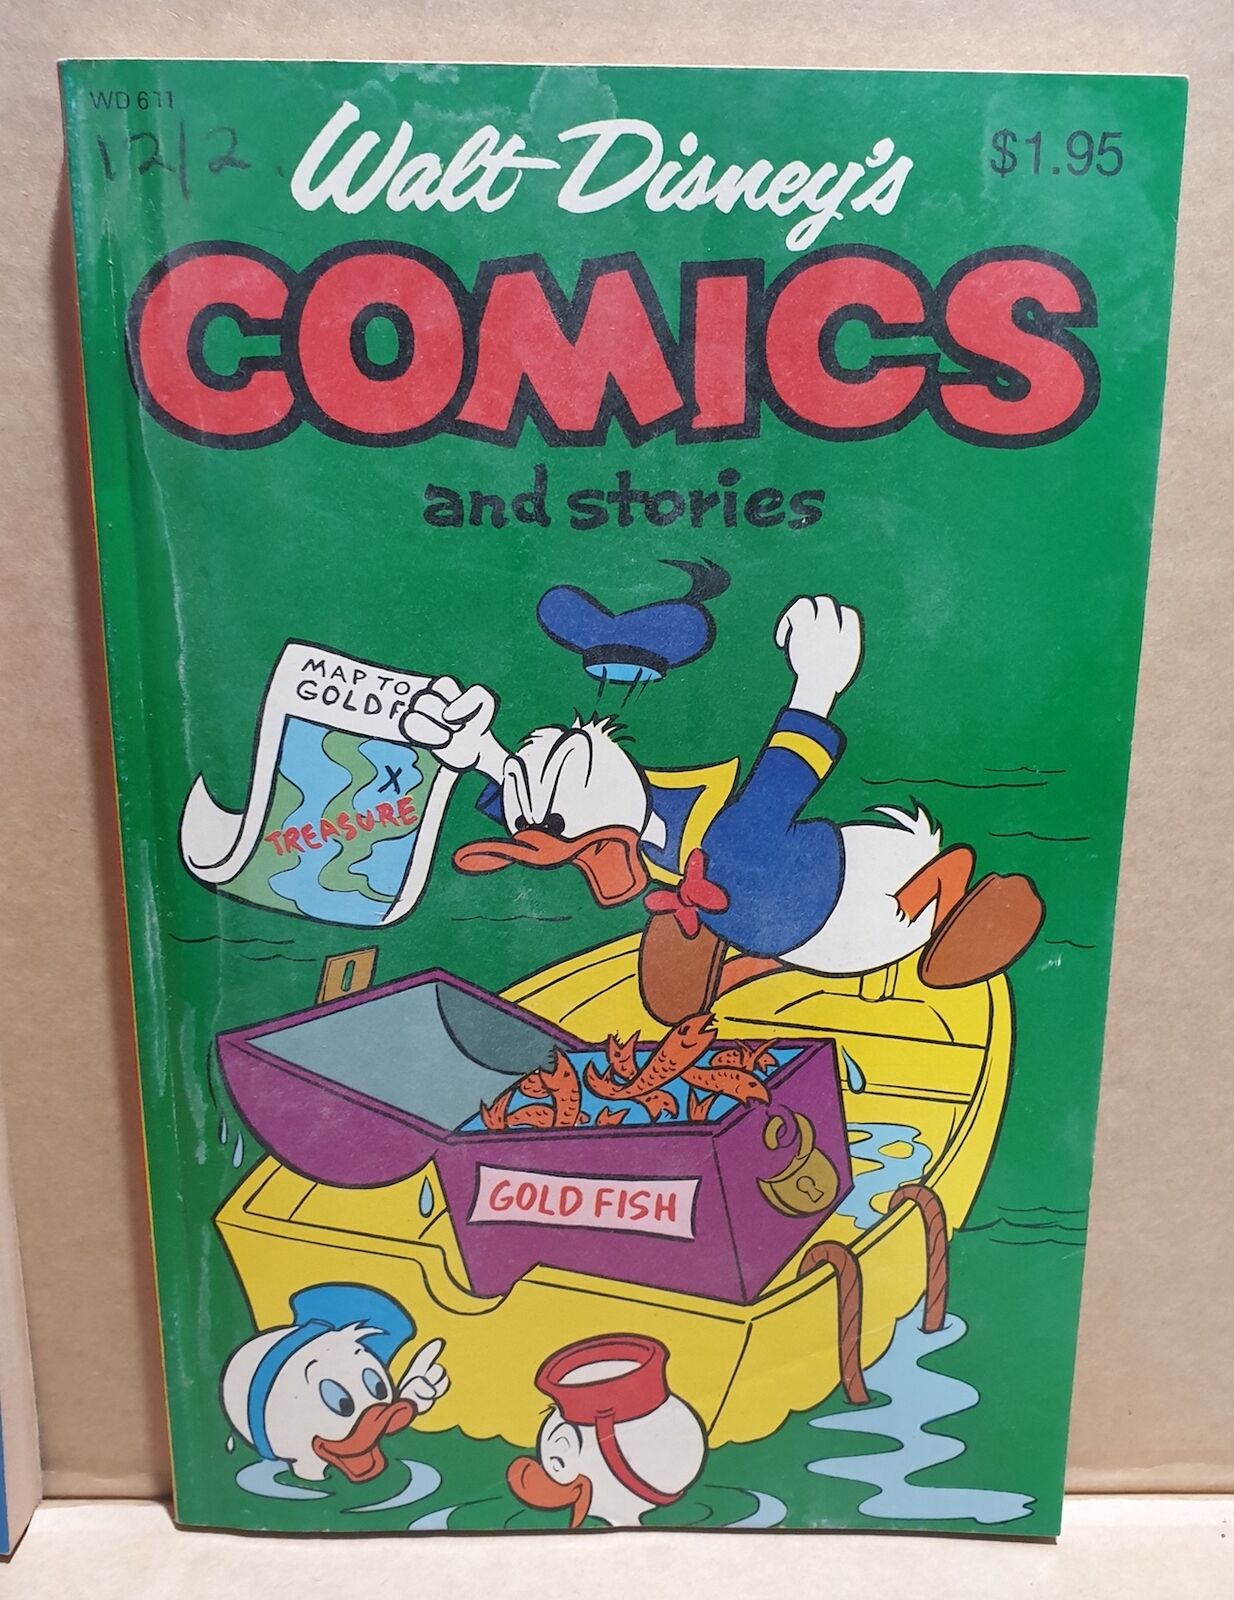 COMIC BOOK - WALT DISNEY COMICS & STORIES WD 611